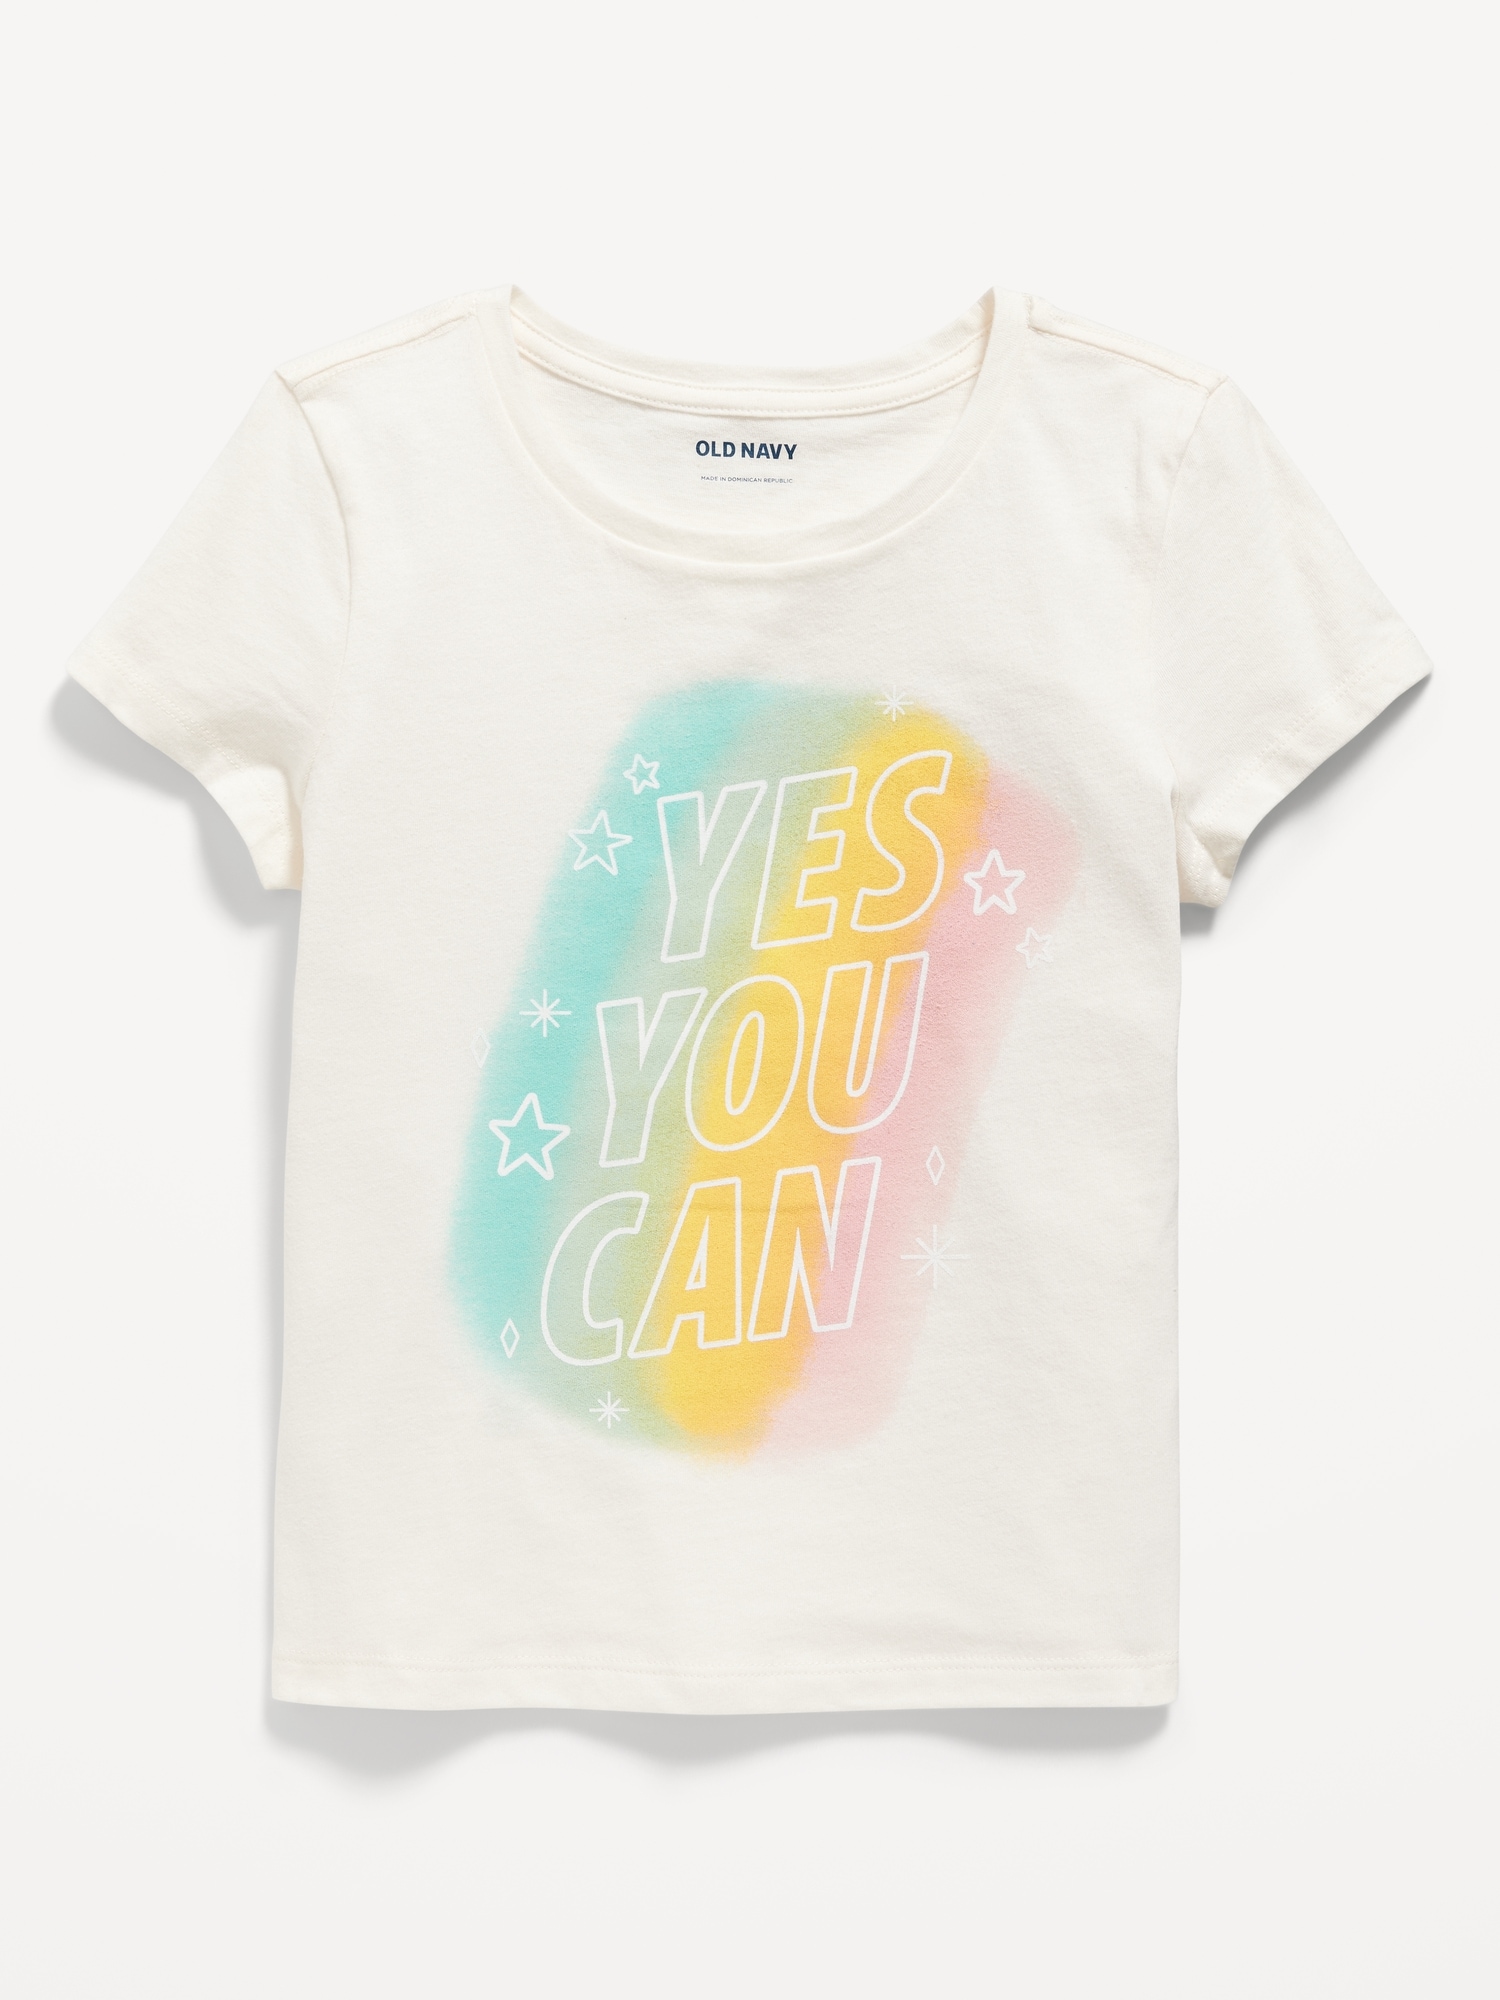 Short-Sleeve Graphic T-Shirt for Girls